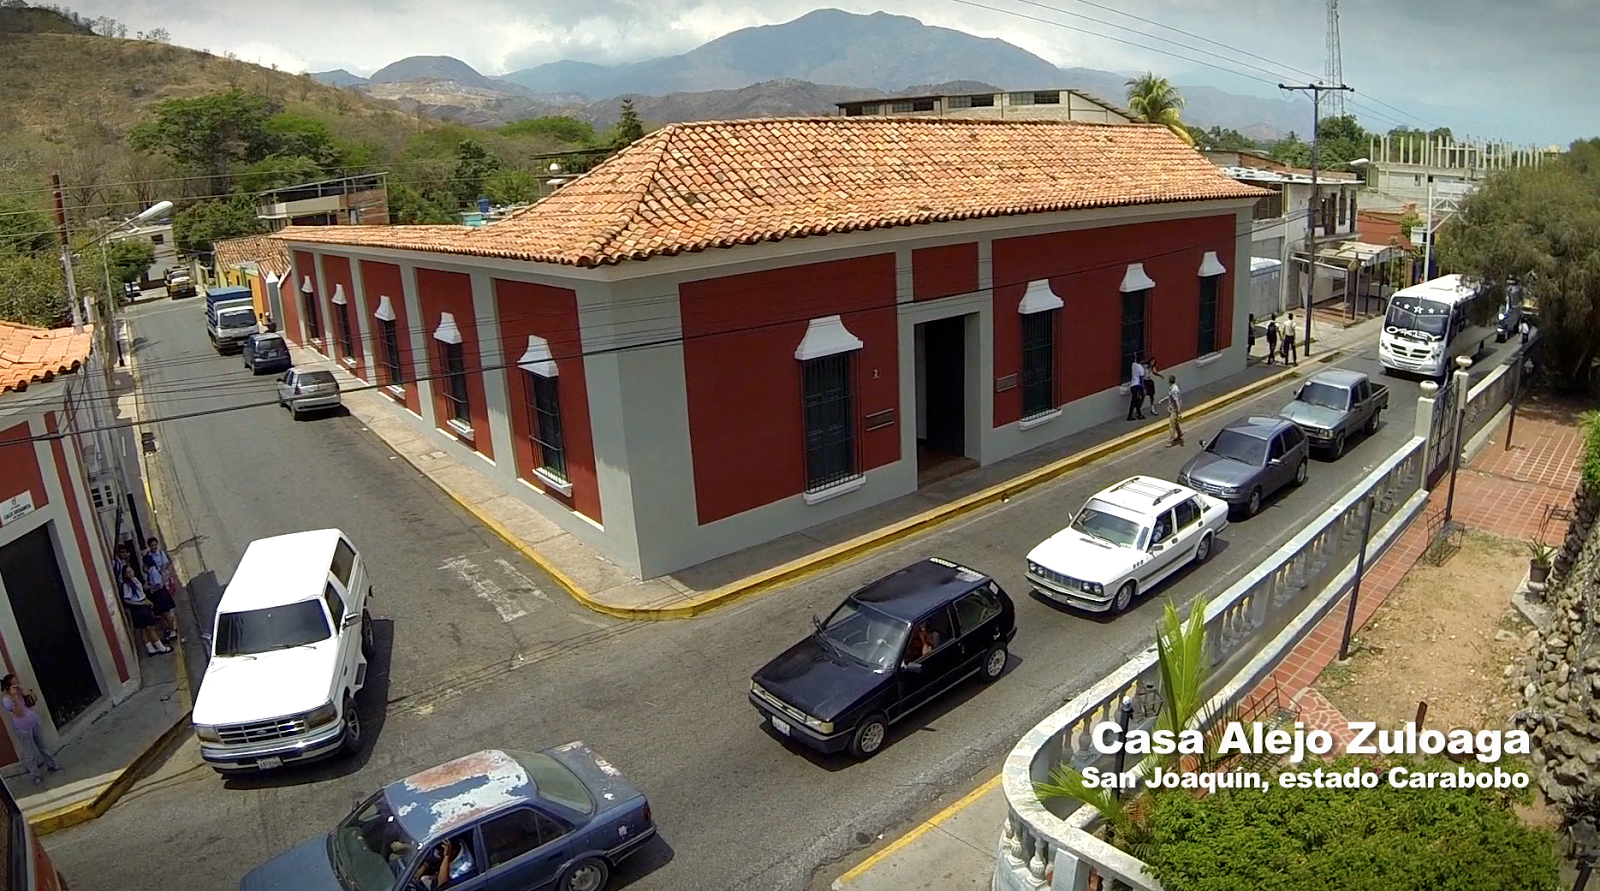 Documental: Casa Alejo Zuloaga